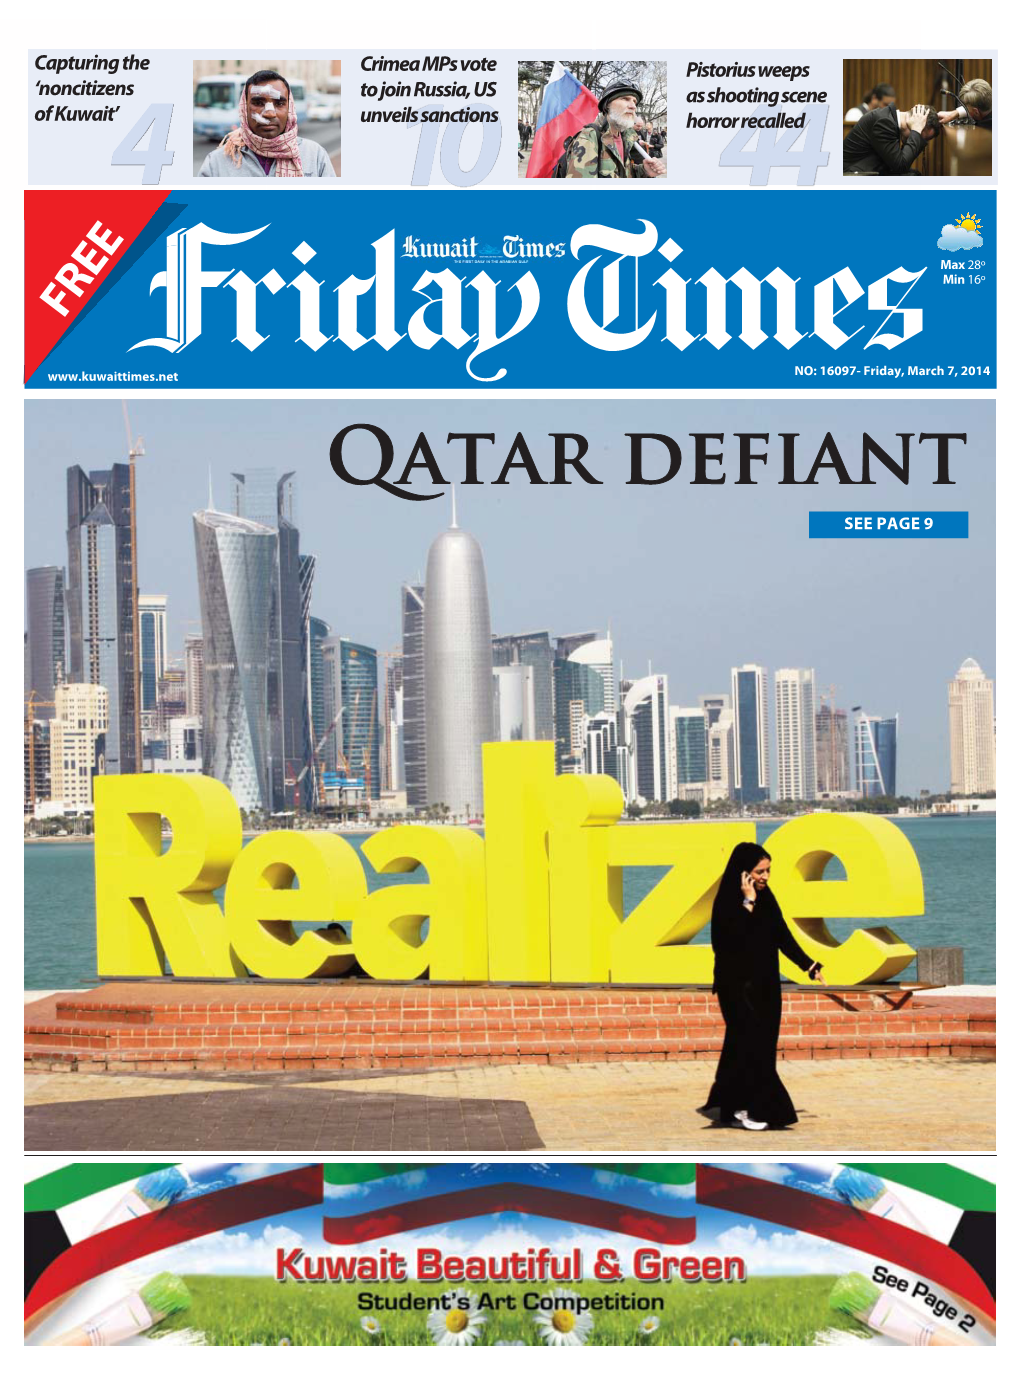 Qatar Defiant